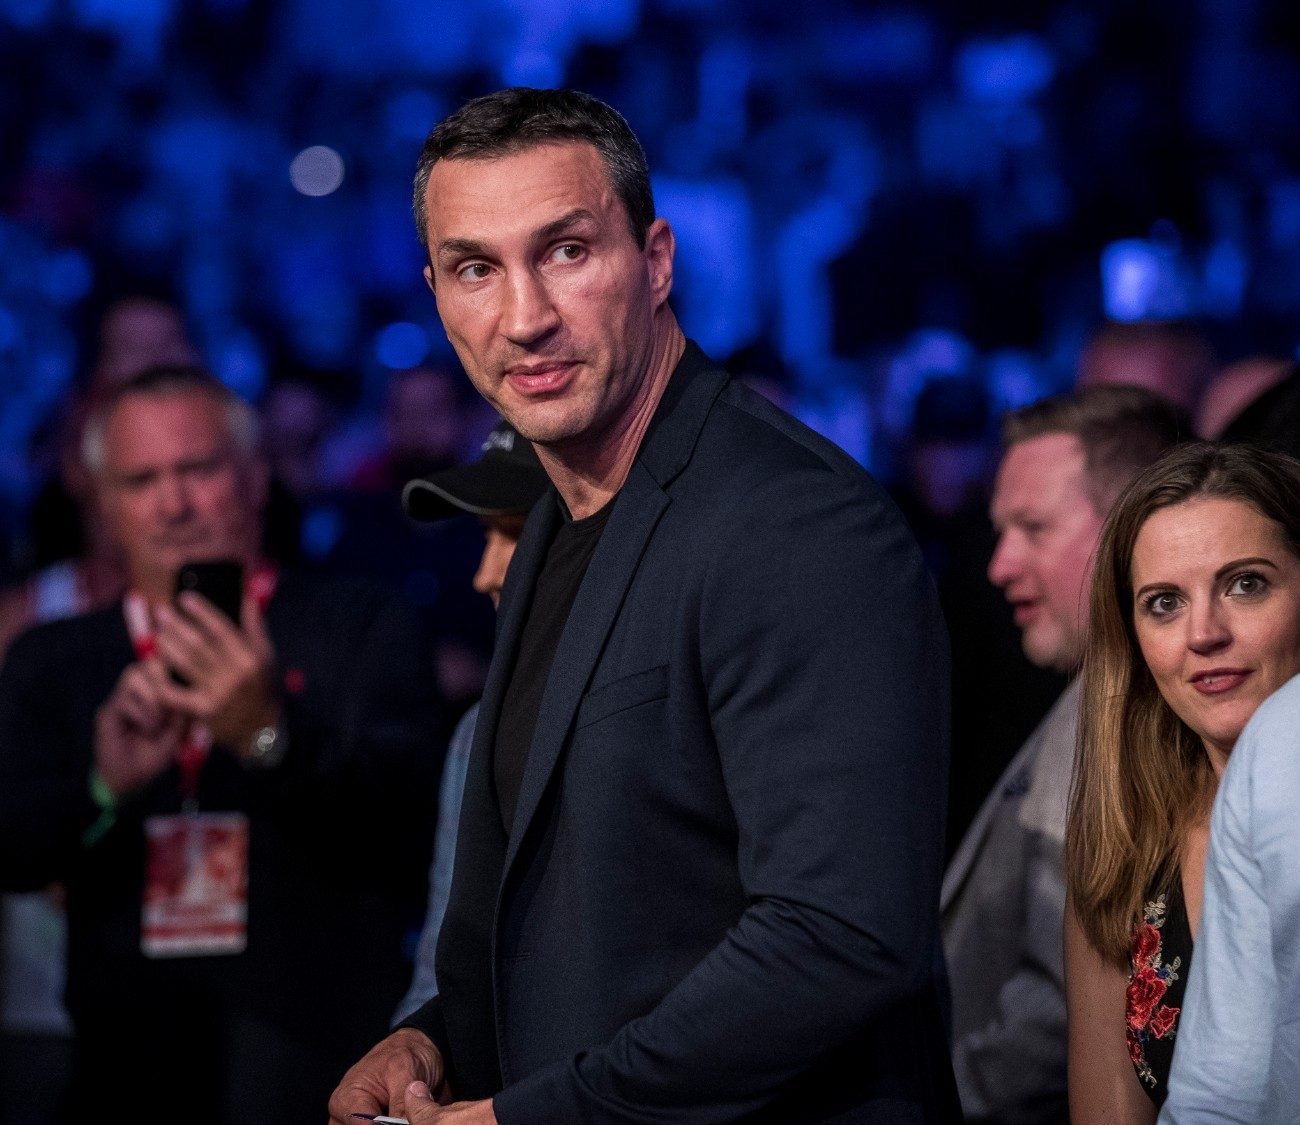 Image: Wladimir Klitschko coming back? promoter Tom Loeffler wants him to